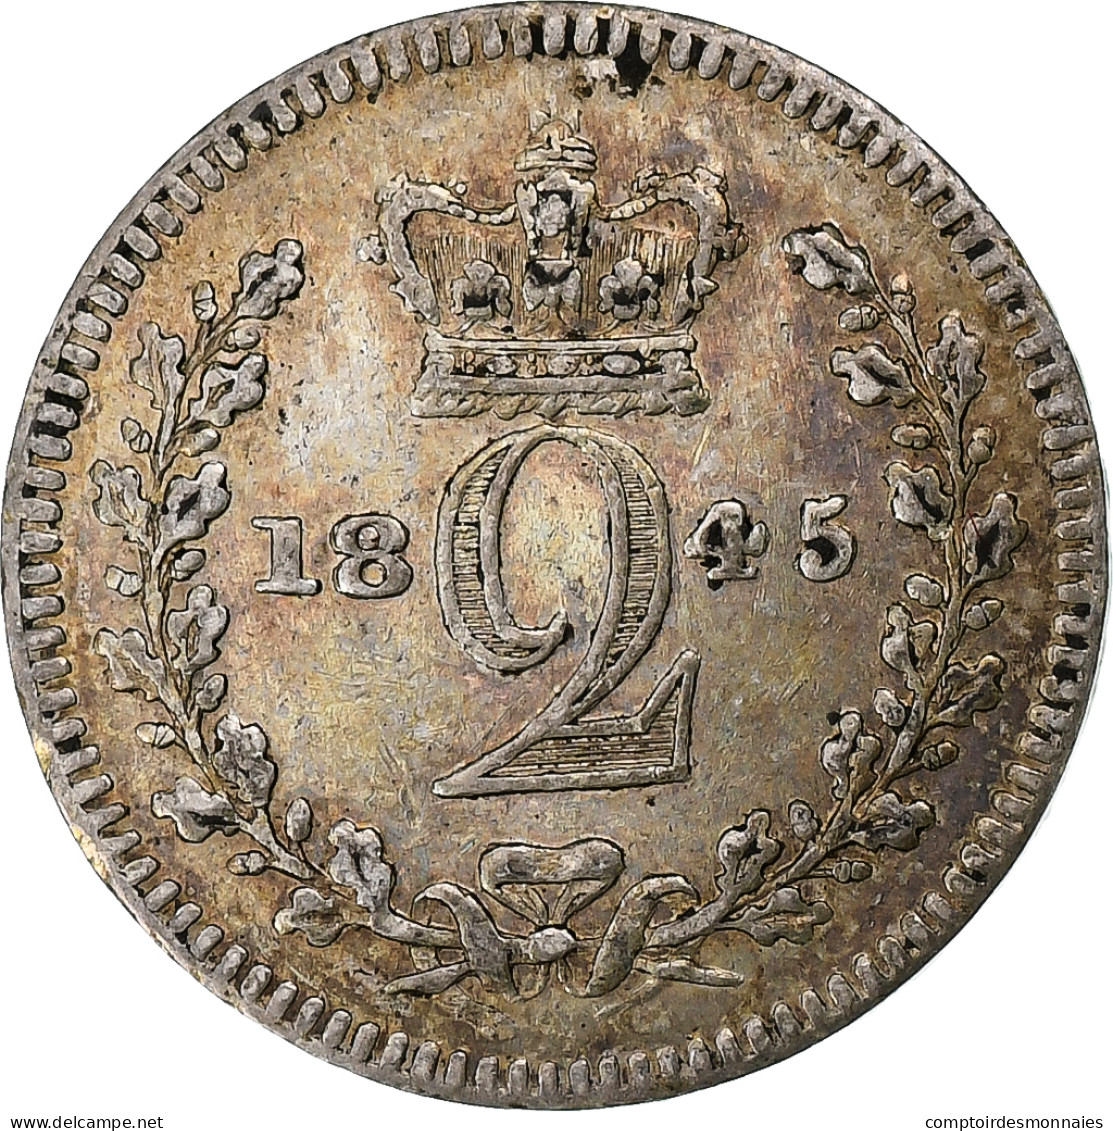 Royaume-Uni, Victoria, 2 Pence, 1845, Londres, Argent, TTB, Spink:3916, KM:729 - D. 1 Penny